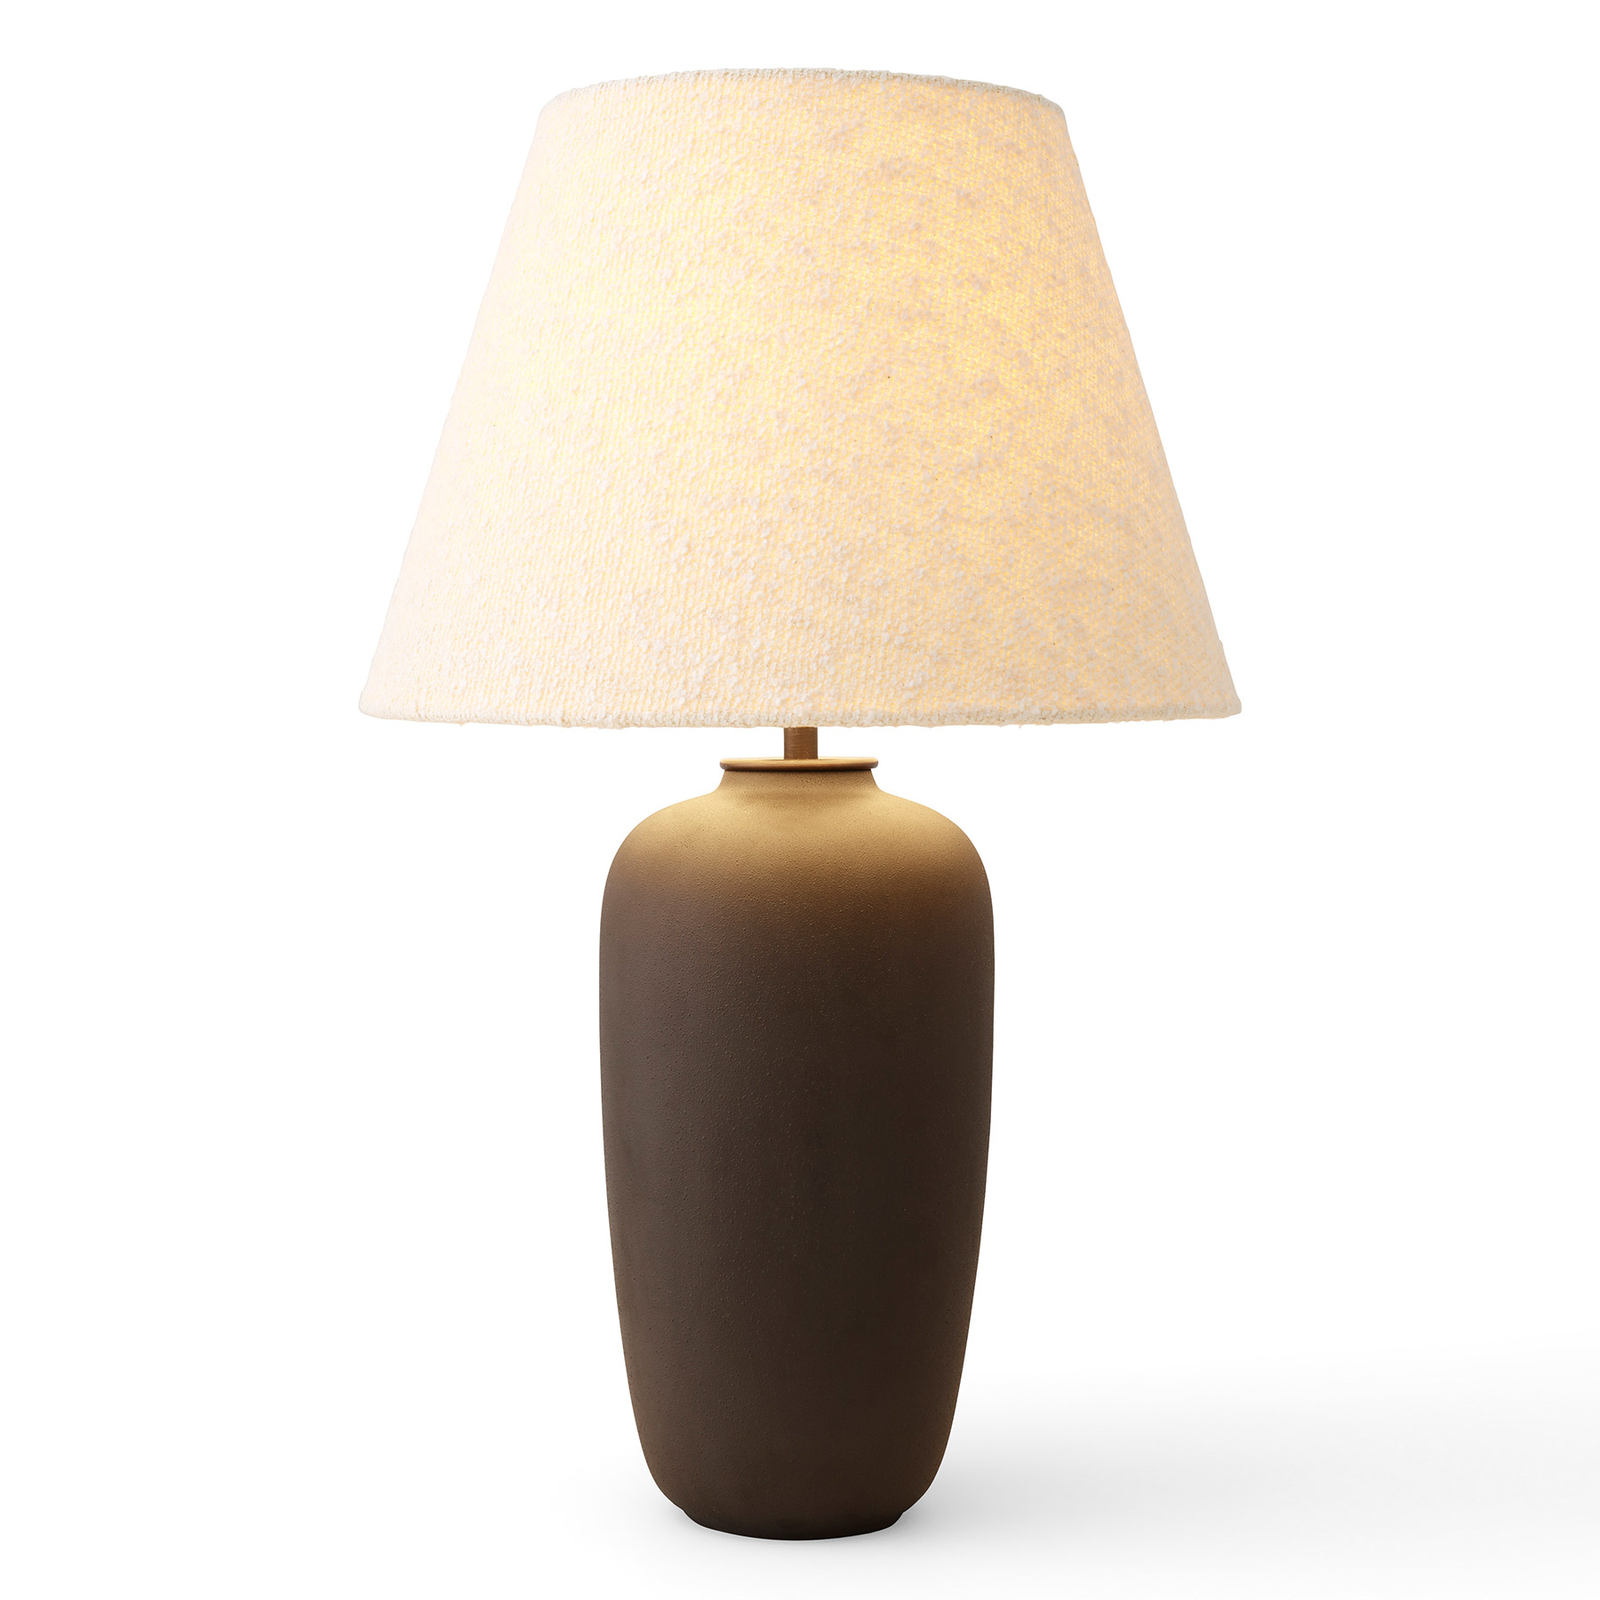 Menu Torso stolová LED lampa, hnedá/biela, 57 cm